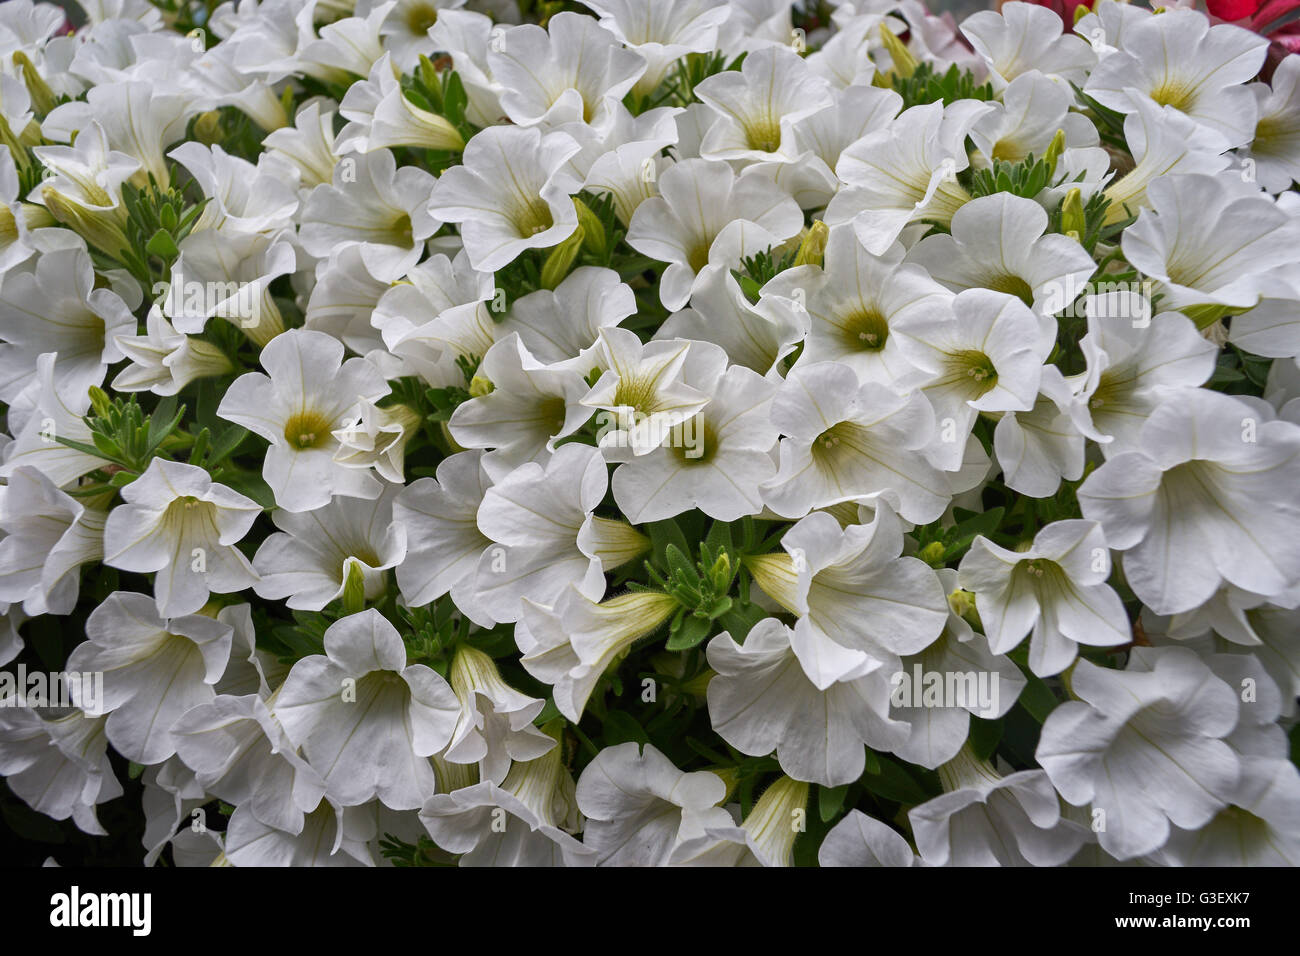 Lush white petunias blooming close up Stock Photo